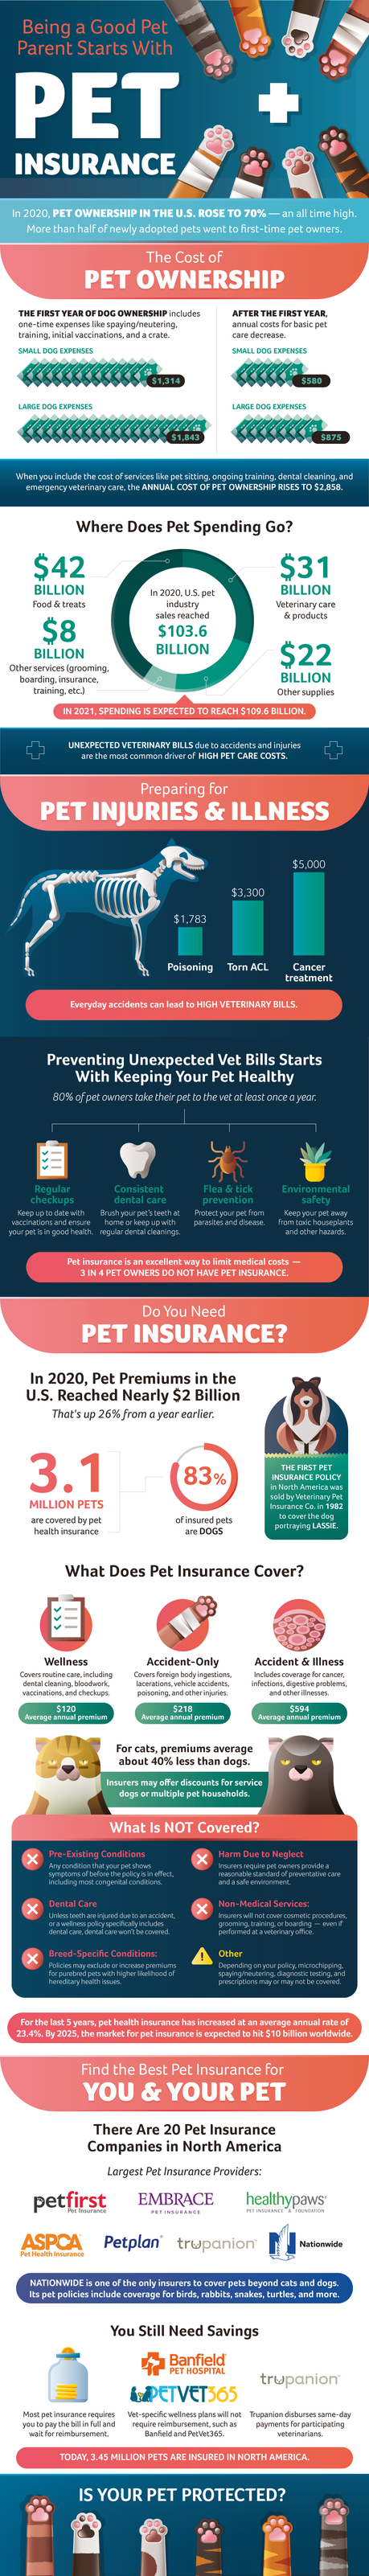 Pet insurance benefits